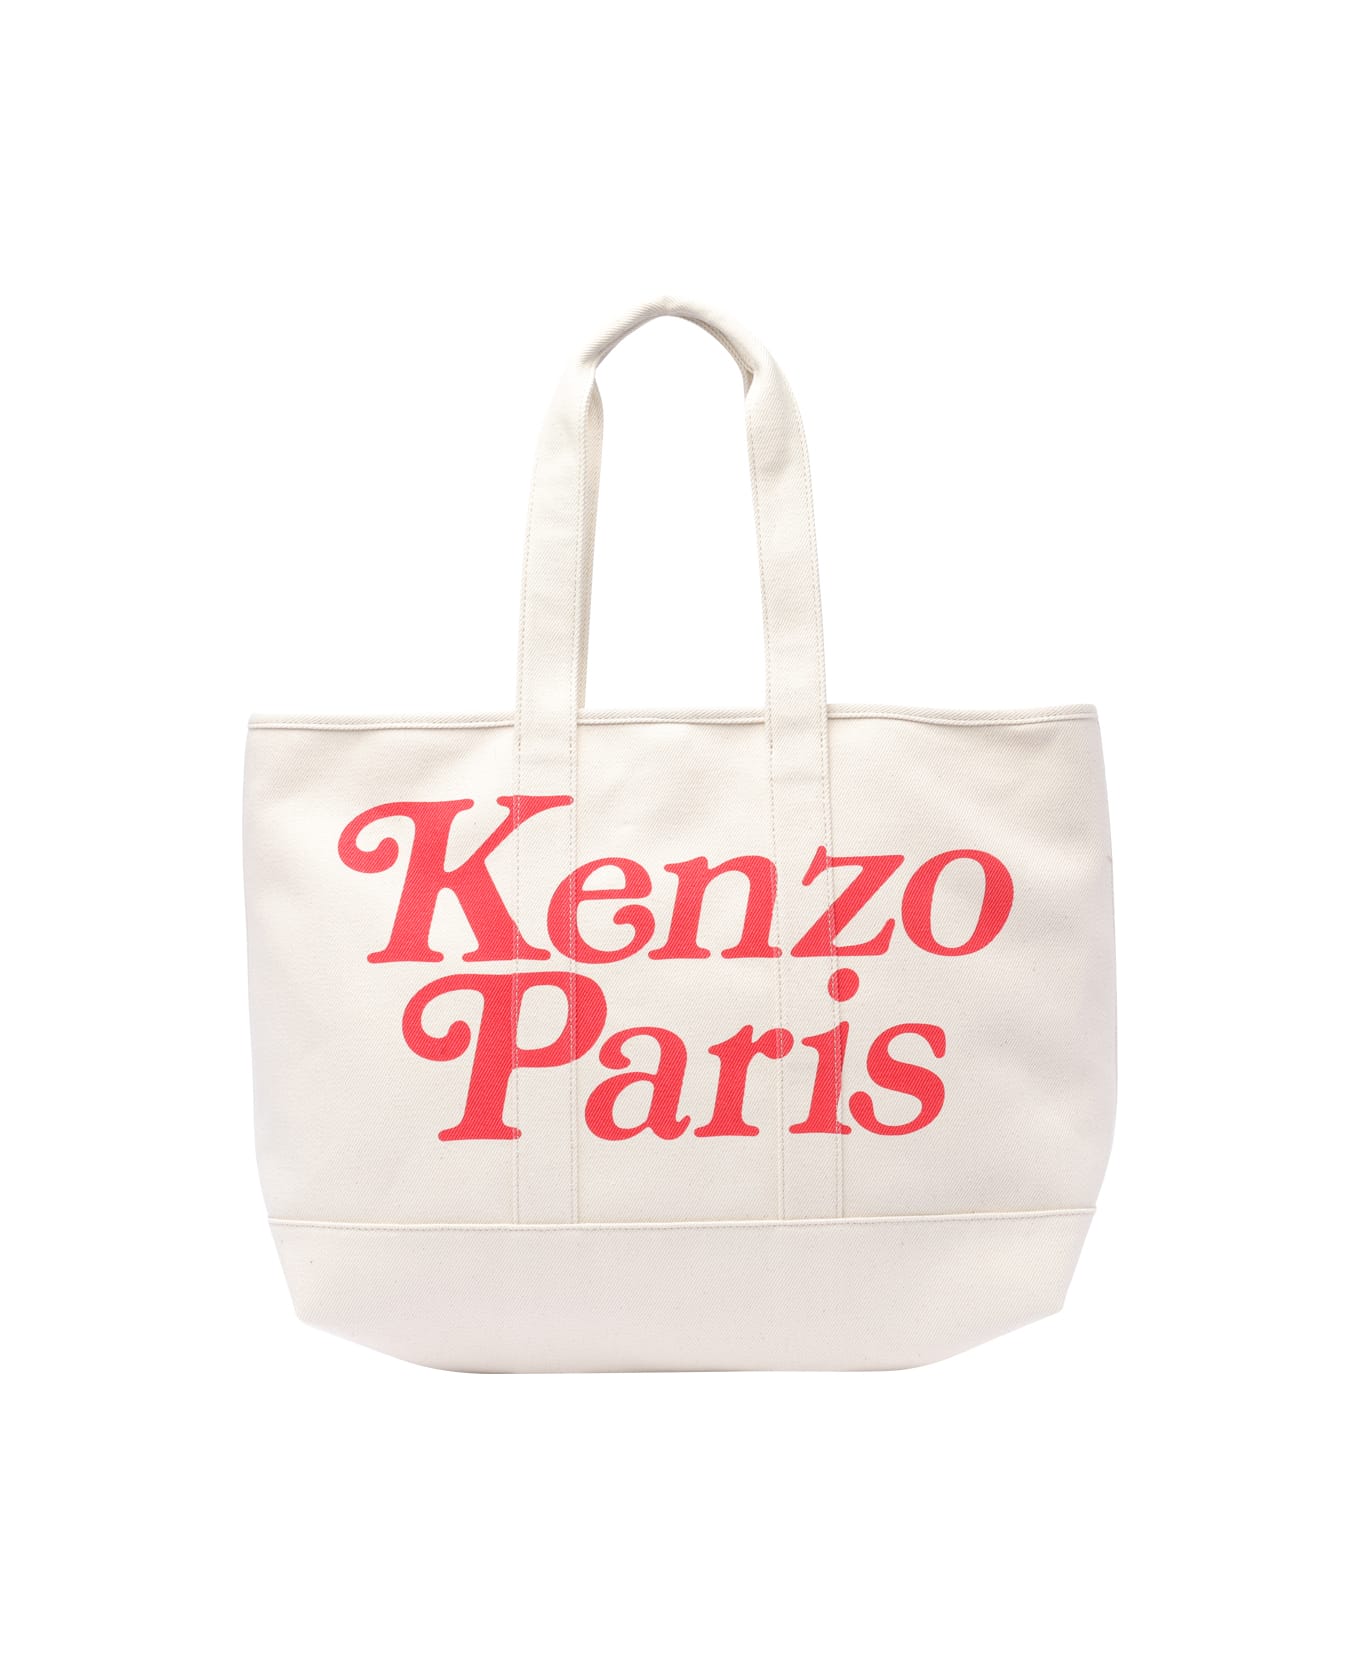 Kenzo Paris Tote Bag - Beige トートバッグ